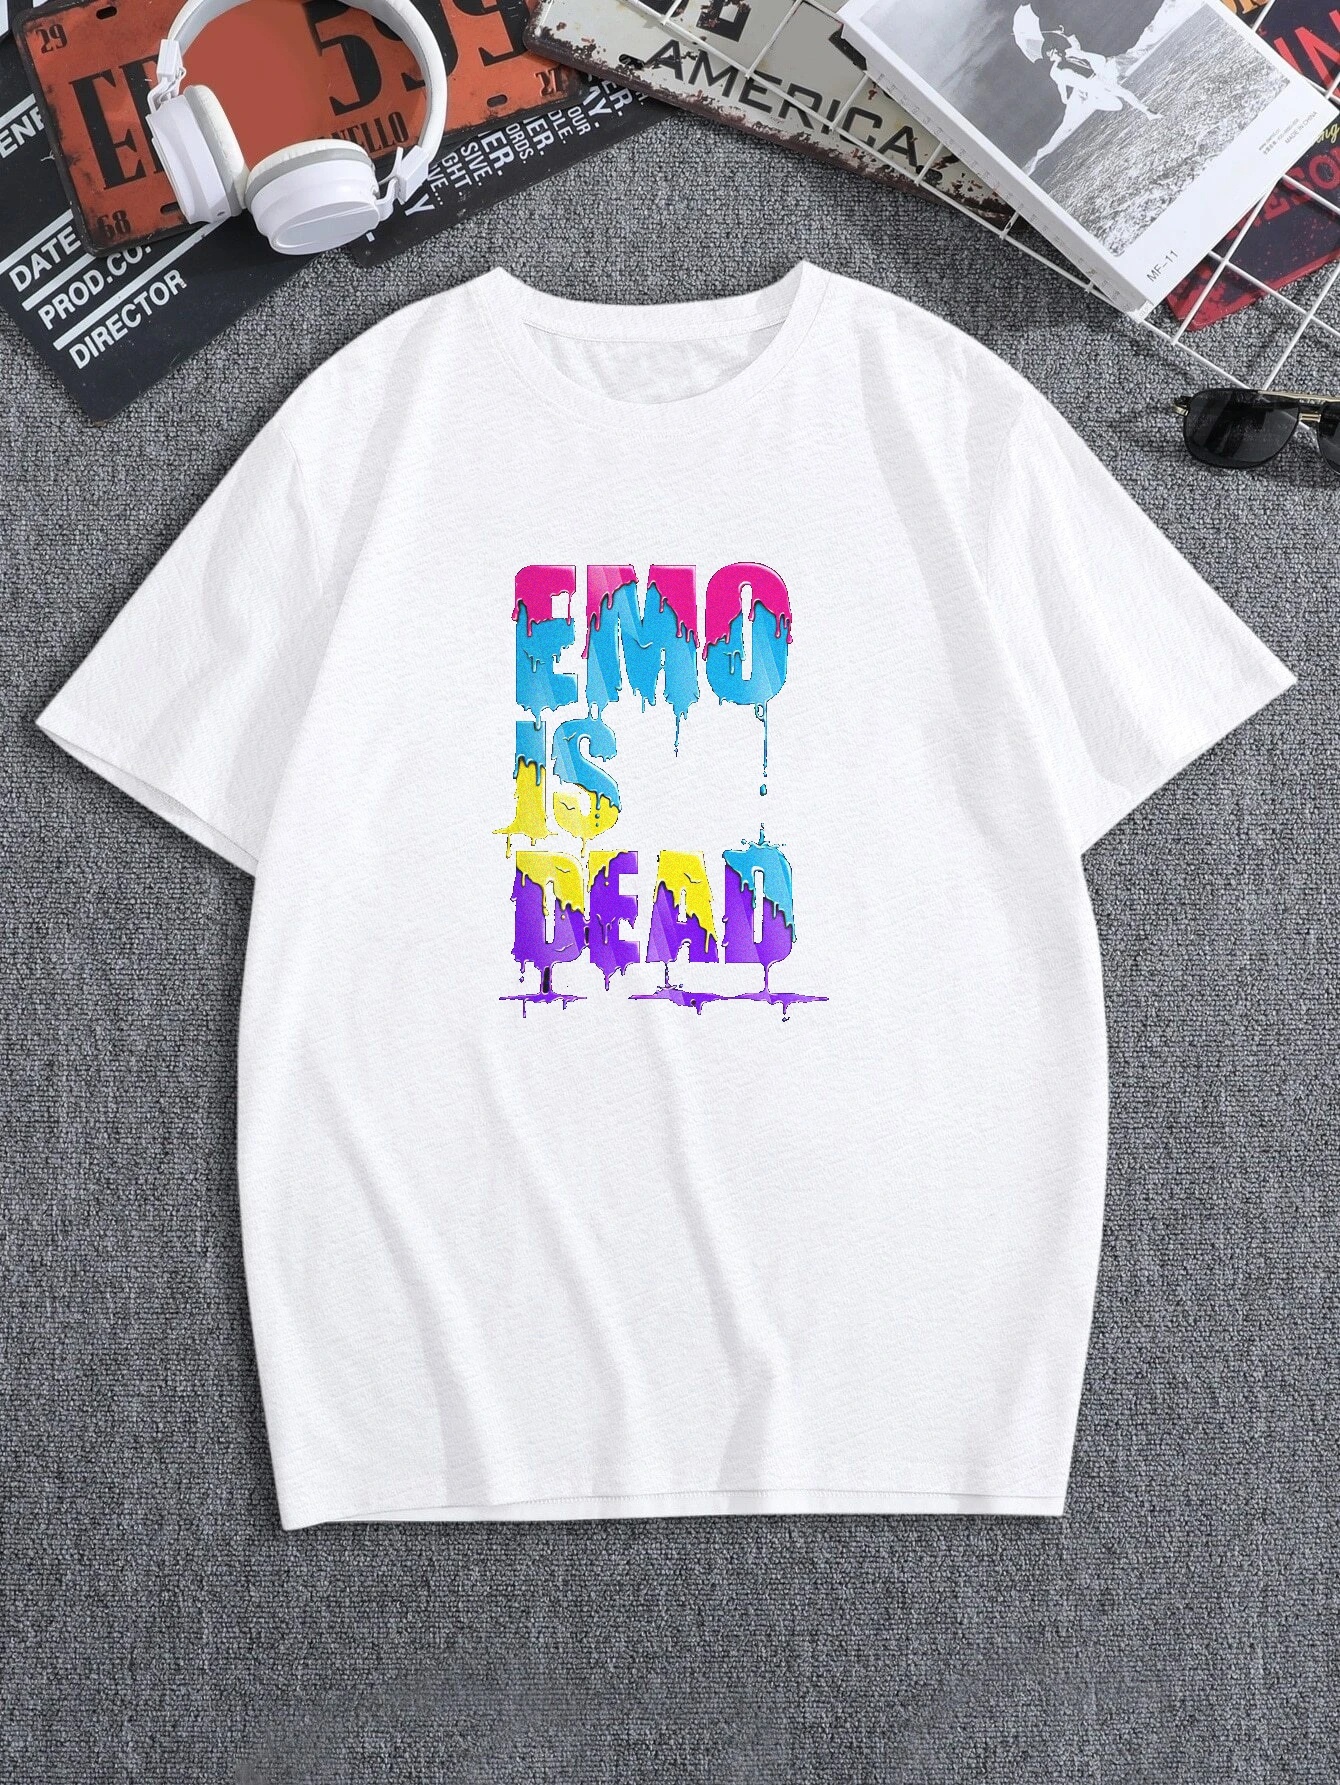 The emo t shirt  Camisetas de chica, Imagenes de camisetas, Camisetas